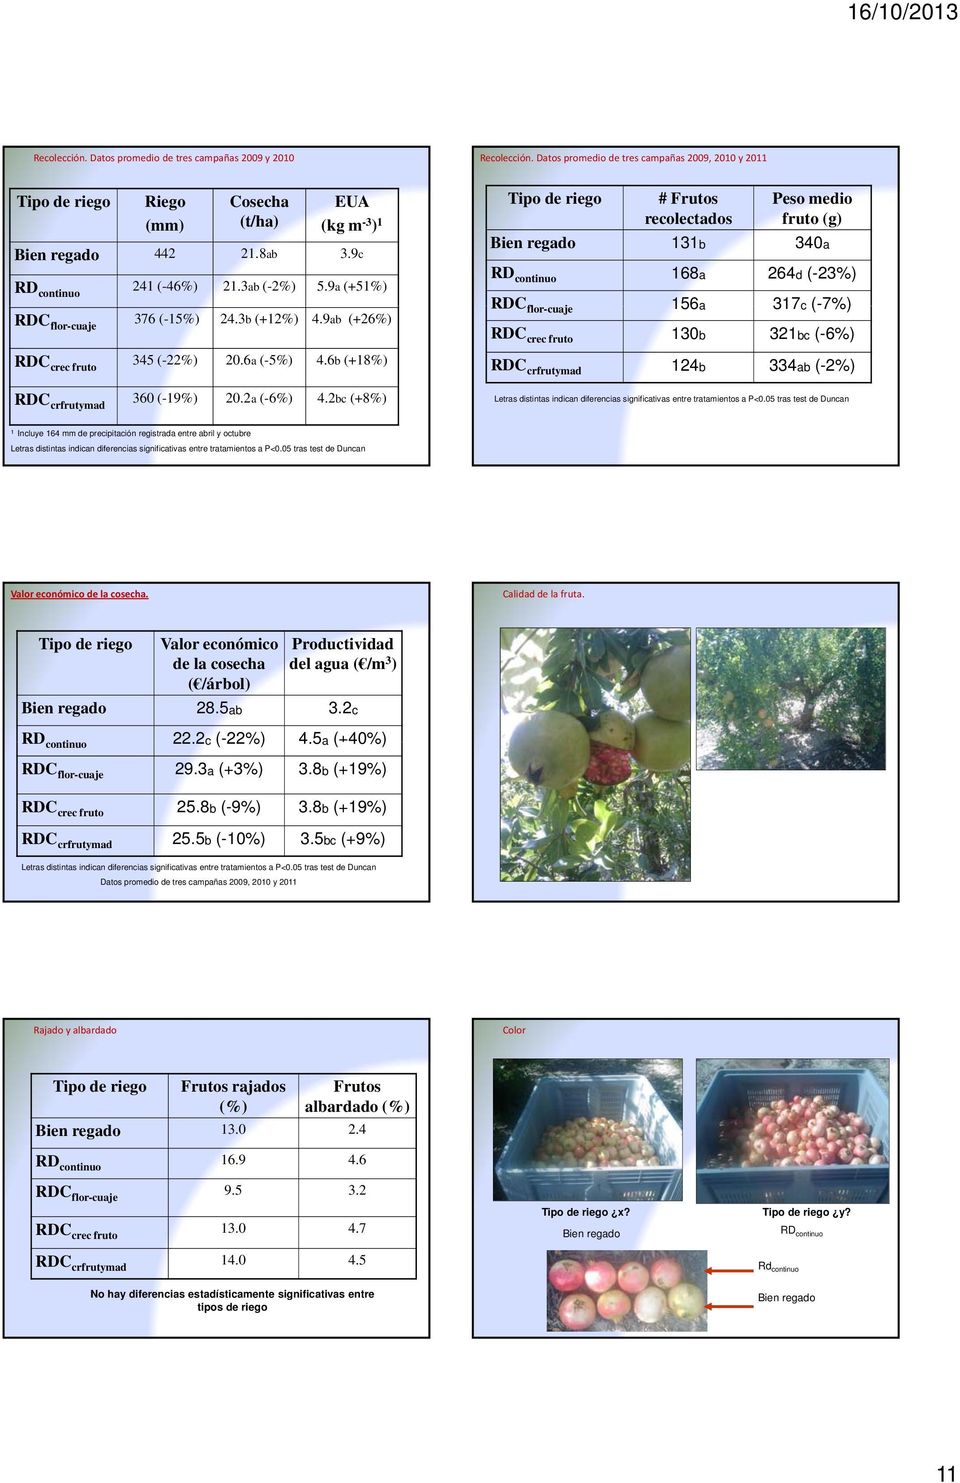 2bc (+8%) Tipo de riego # Frutos recolectados Peso medio fruto (g) Bien regado 131b 340a RD continuo 168a 264d (-23%) RDC flor-cuaje 156a 317c (-7%) RDC crec fruto 130b 321bc (-6%) RDC crfrutymad